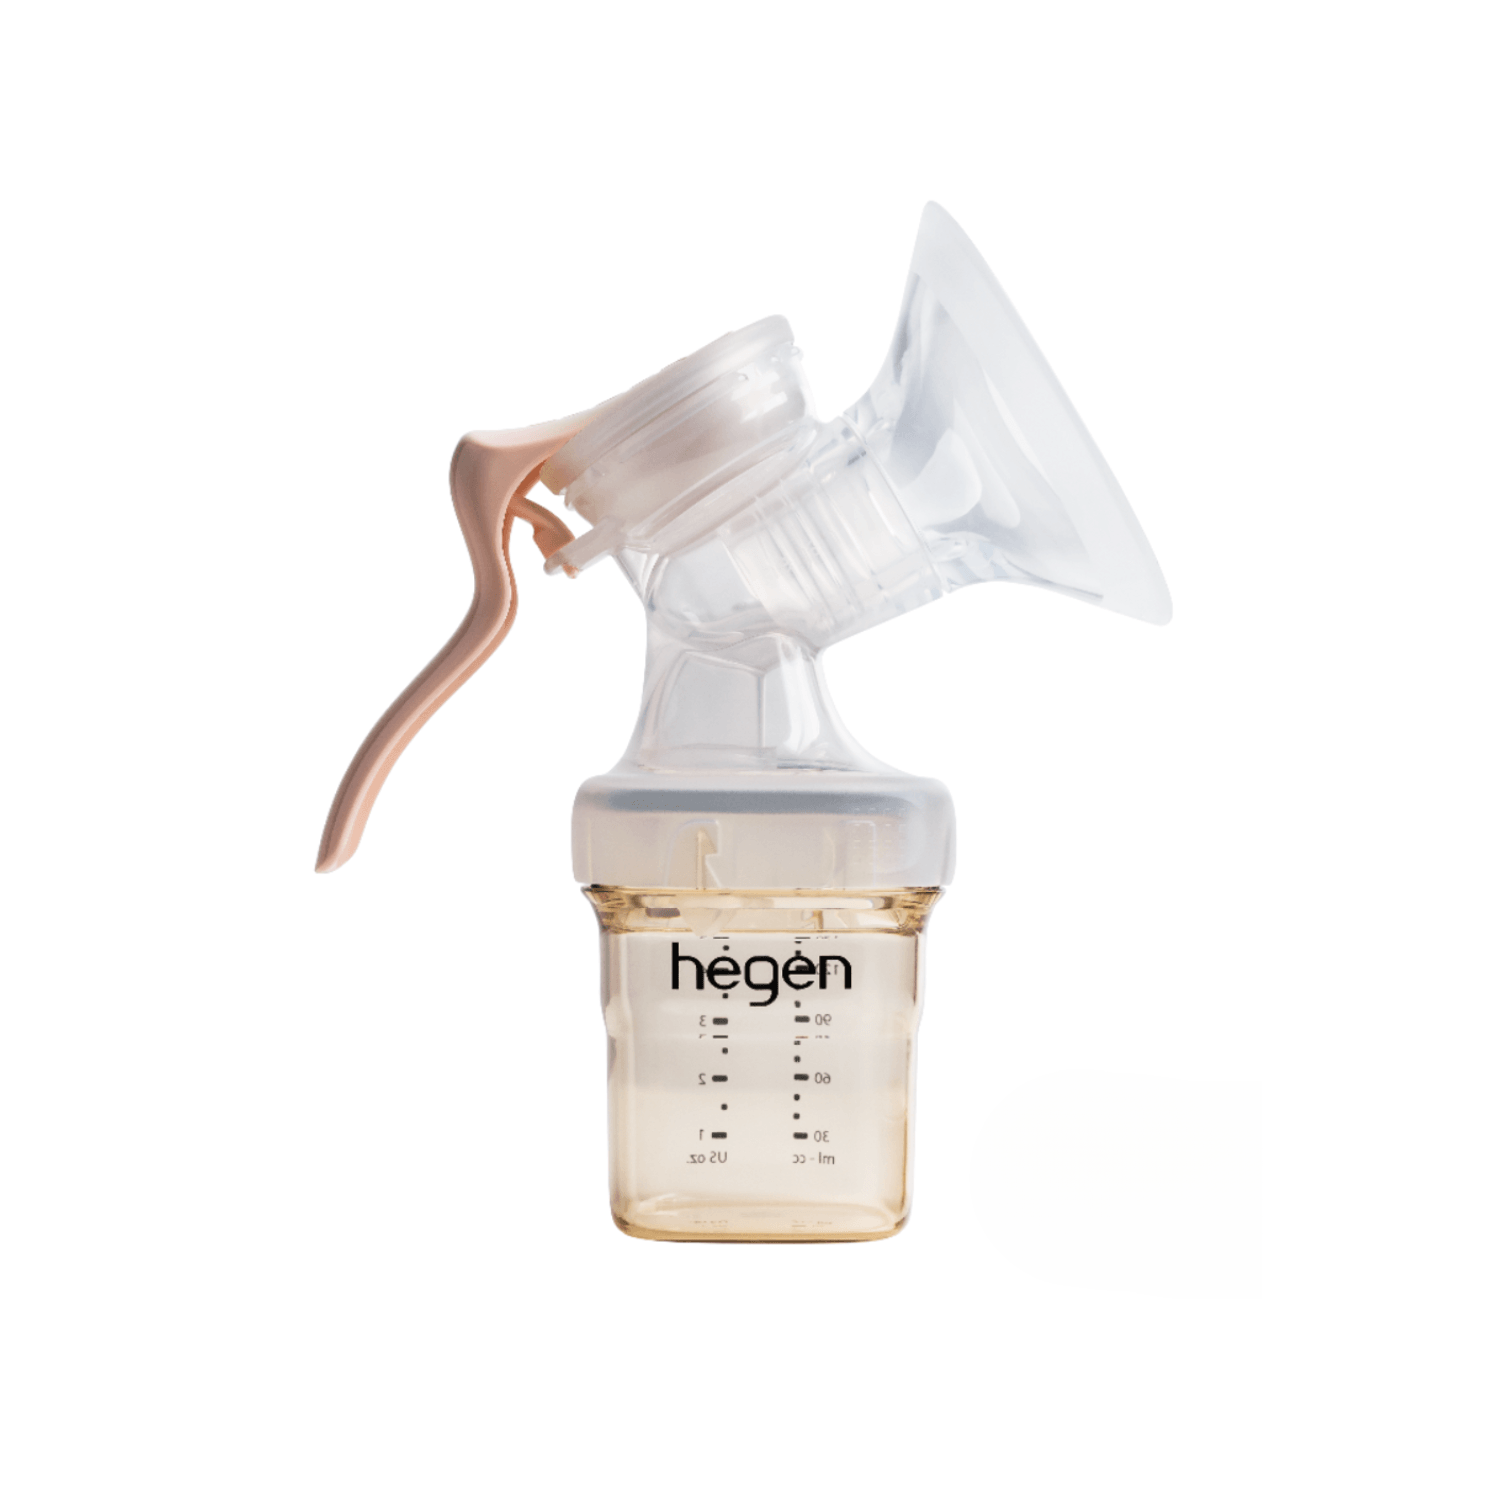 Hegen Express Store Feed Starter Bundle (Breast Pump & Feeding Bottles) Suitable for Newborn - hegen.us